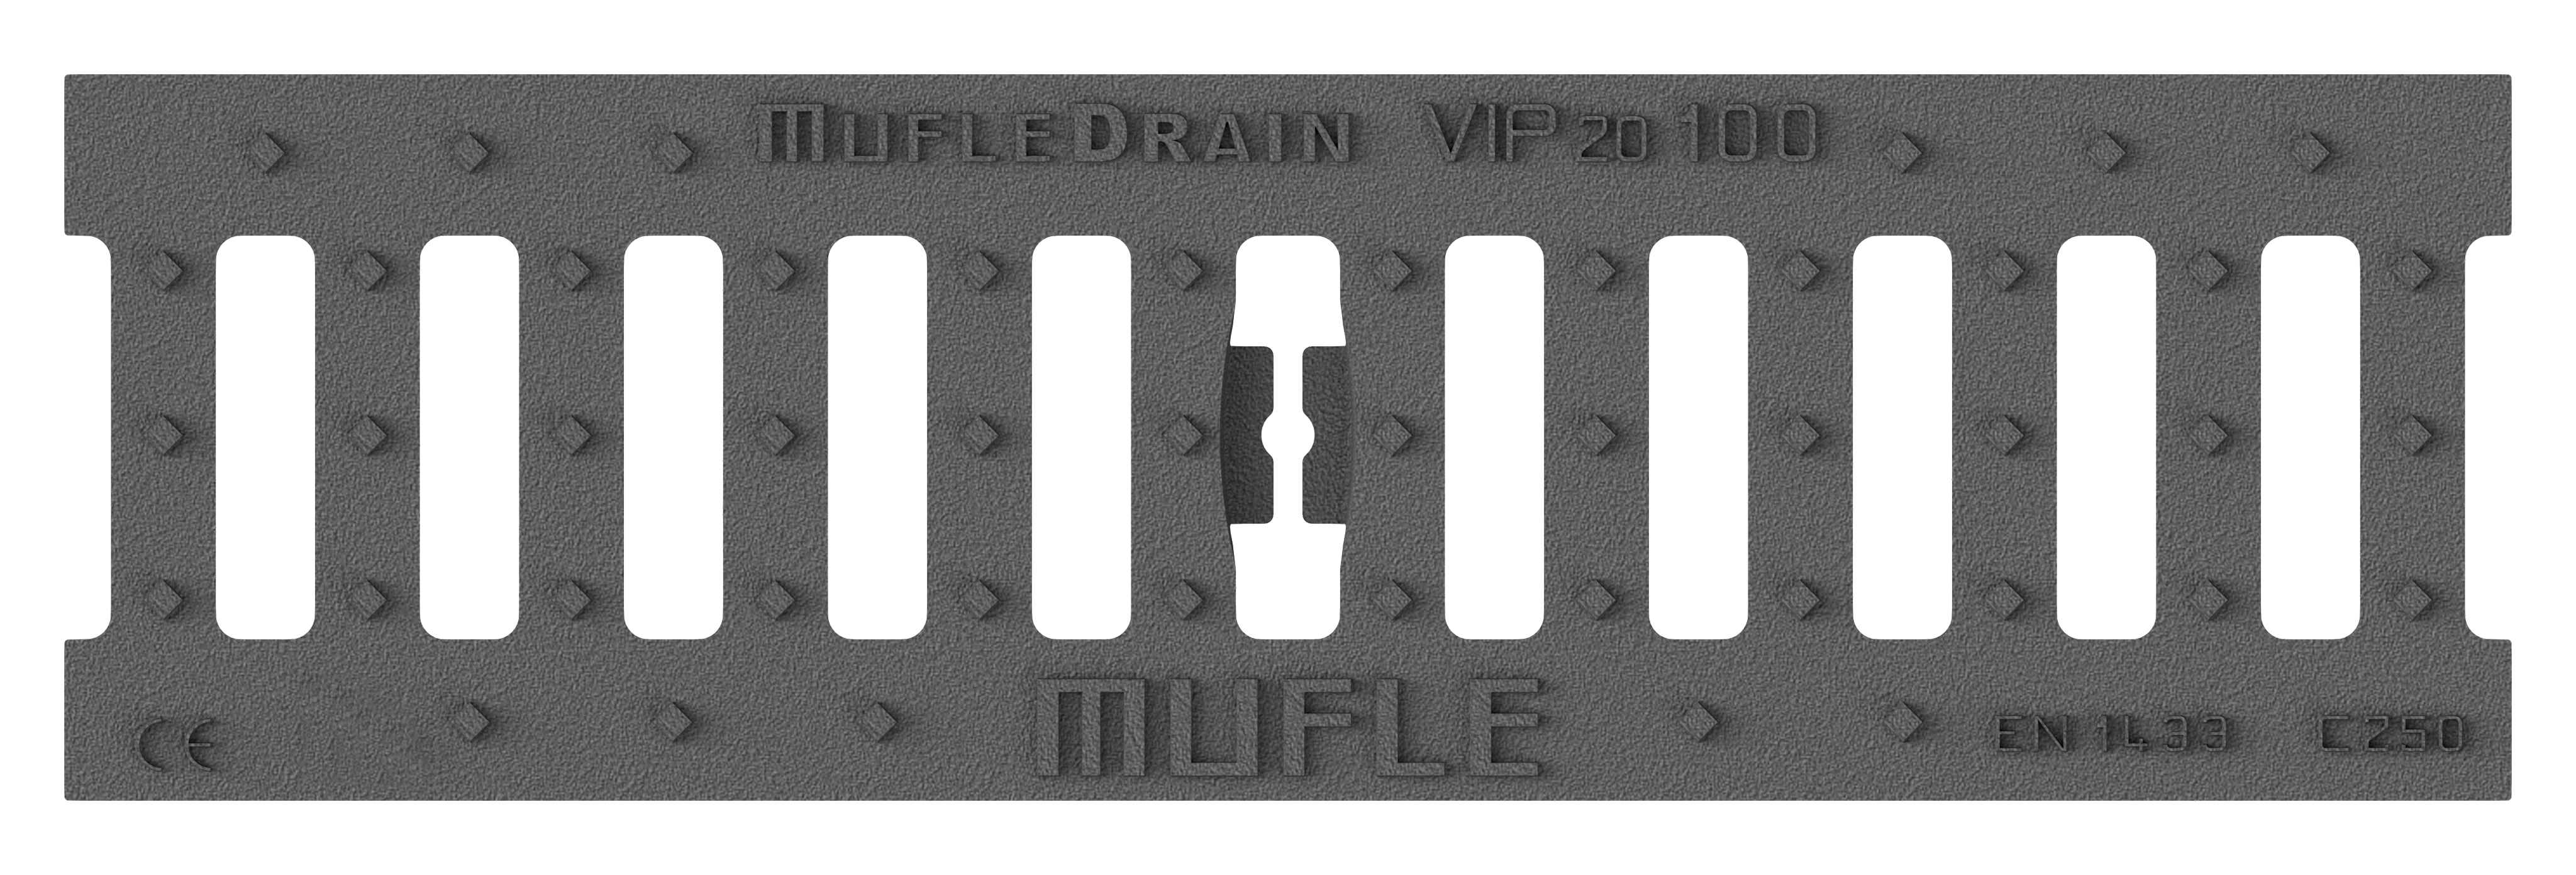 Ductile iron 20 mm slot grating